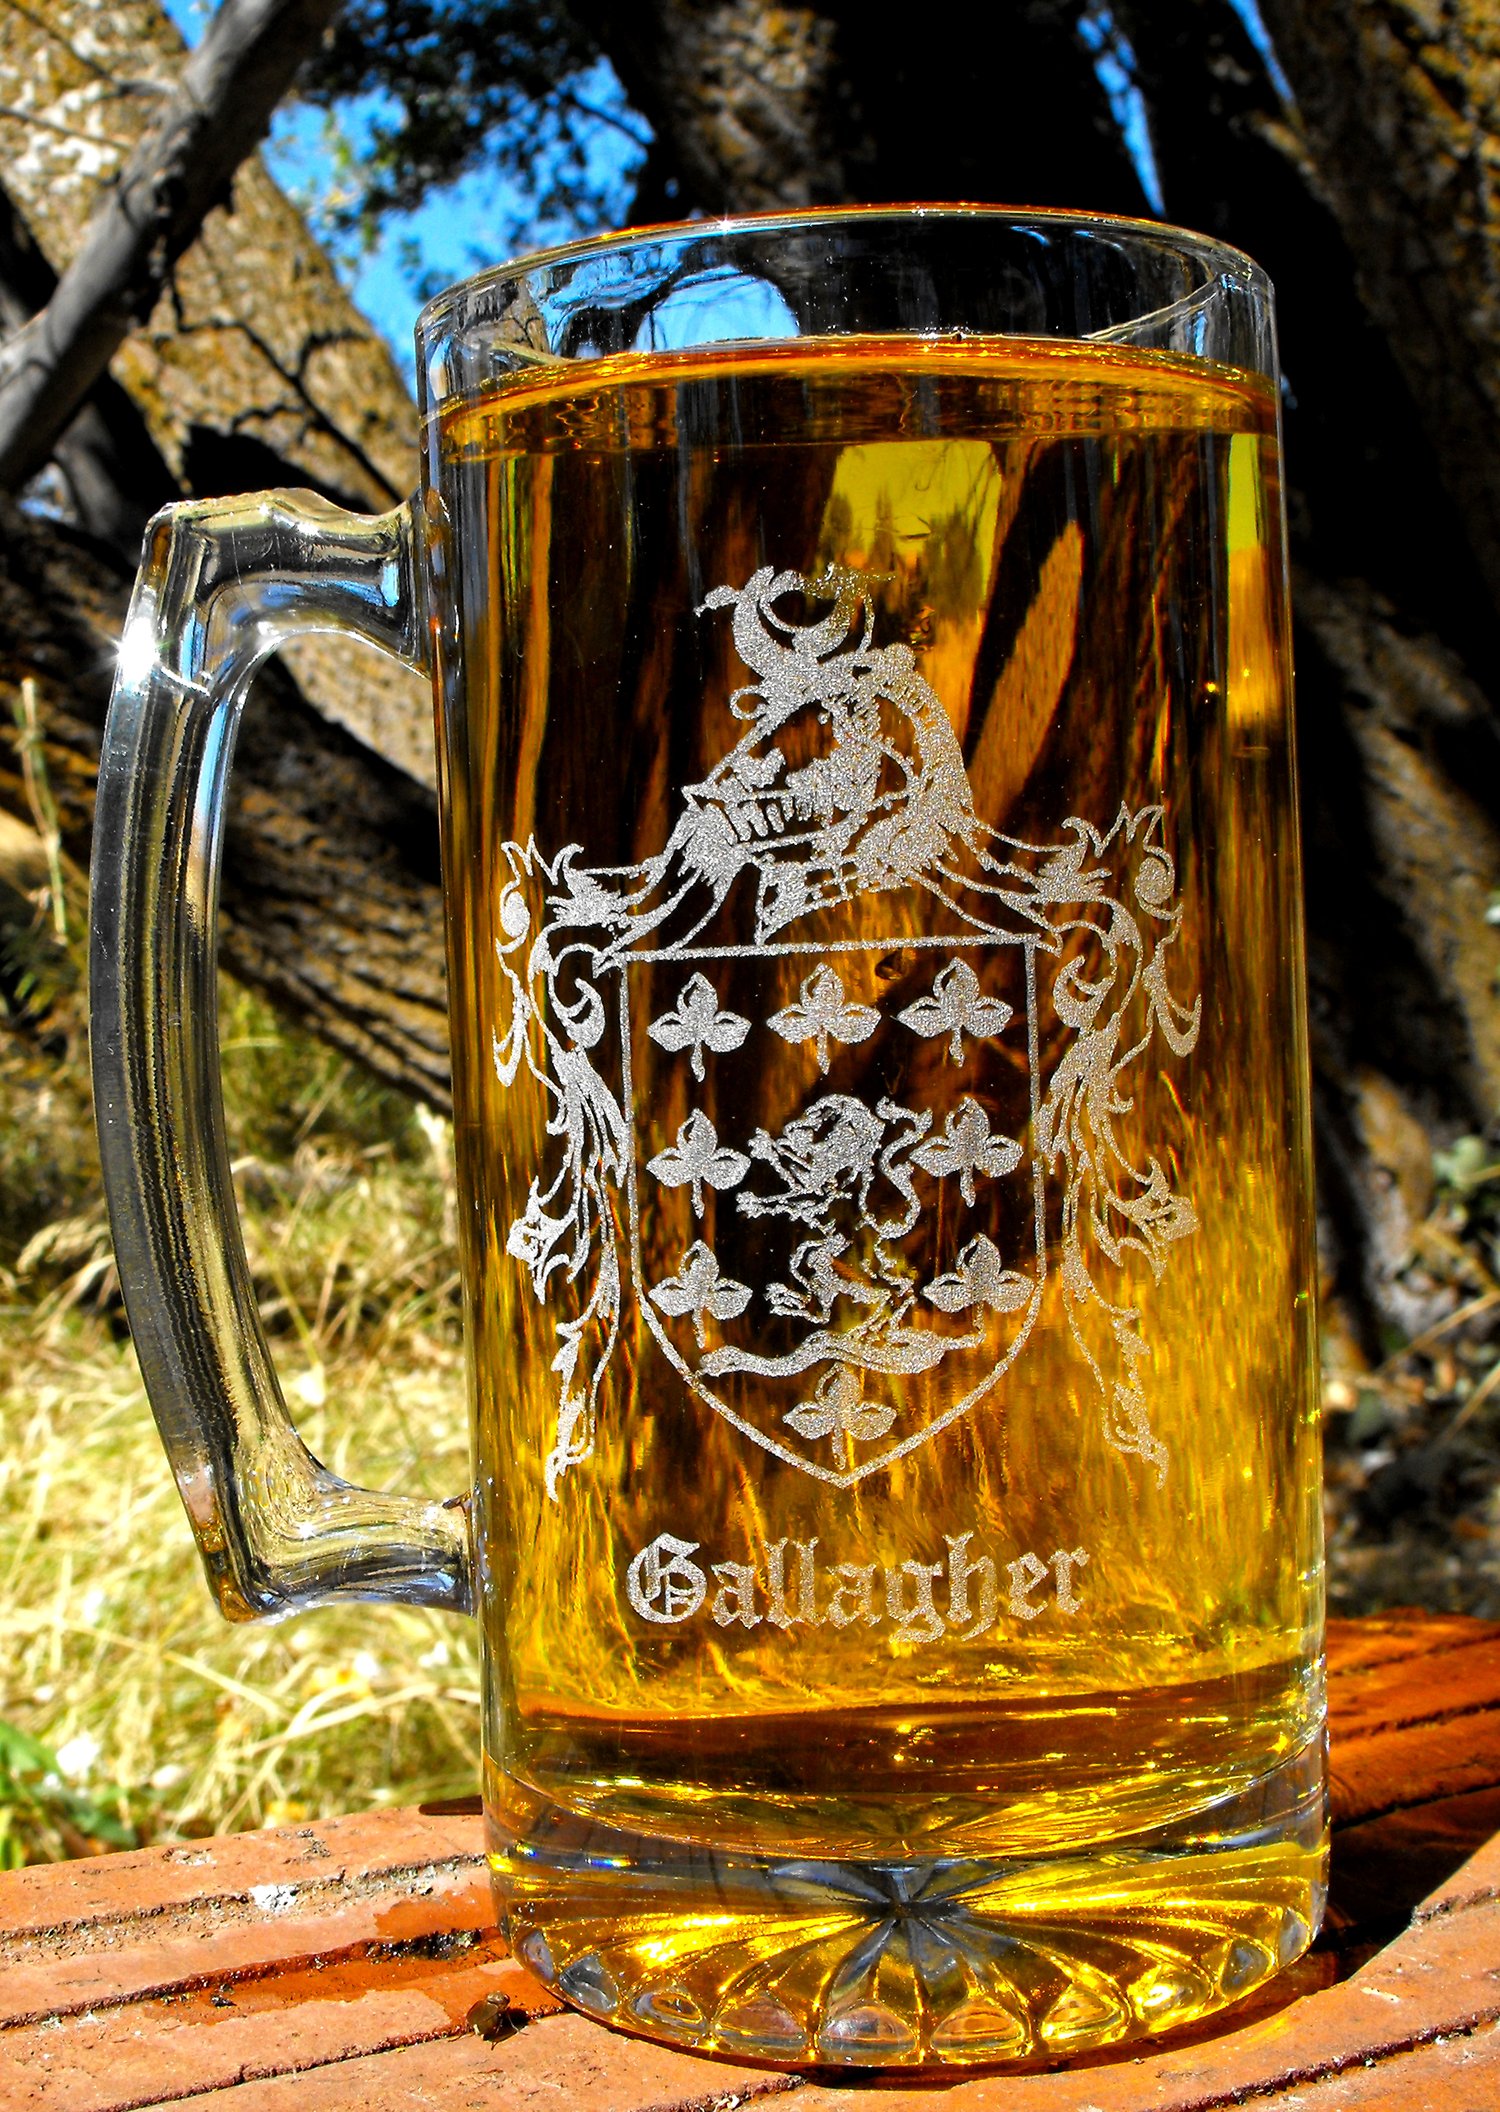 Beer Mug - German State Crests - 1L, 7.9 in.